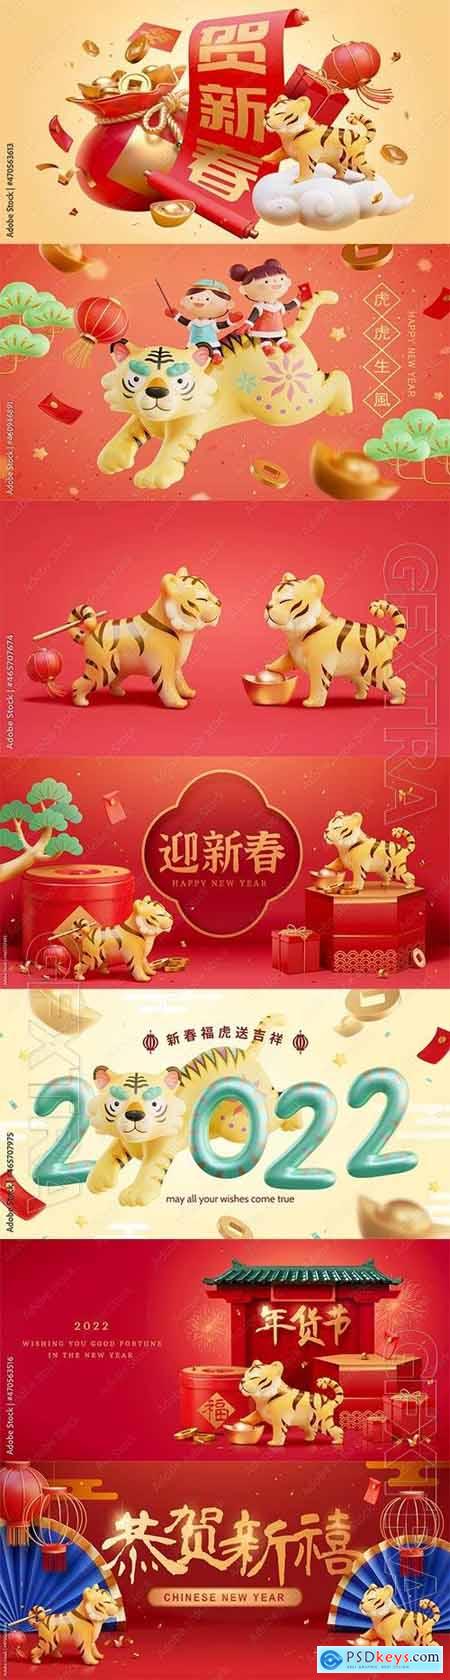 3d CNY tiger zodiac scene vector design